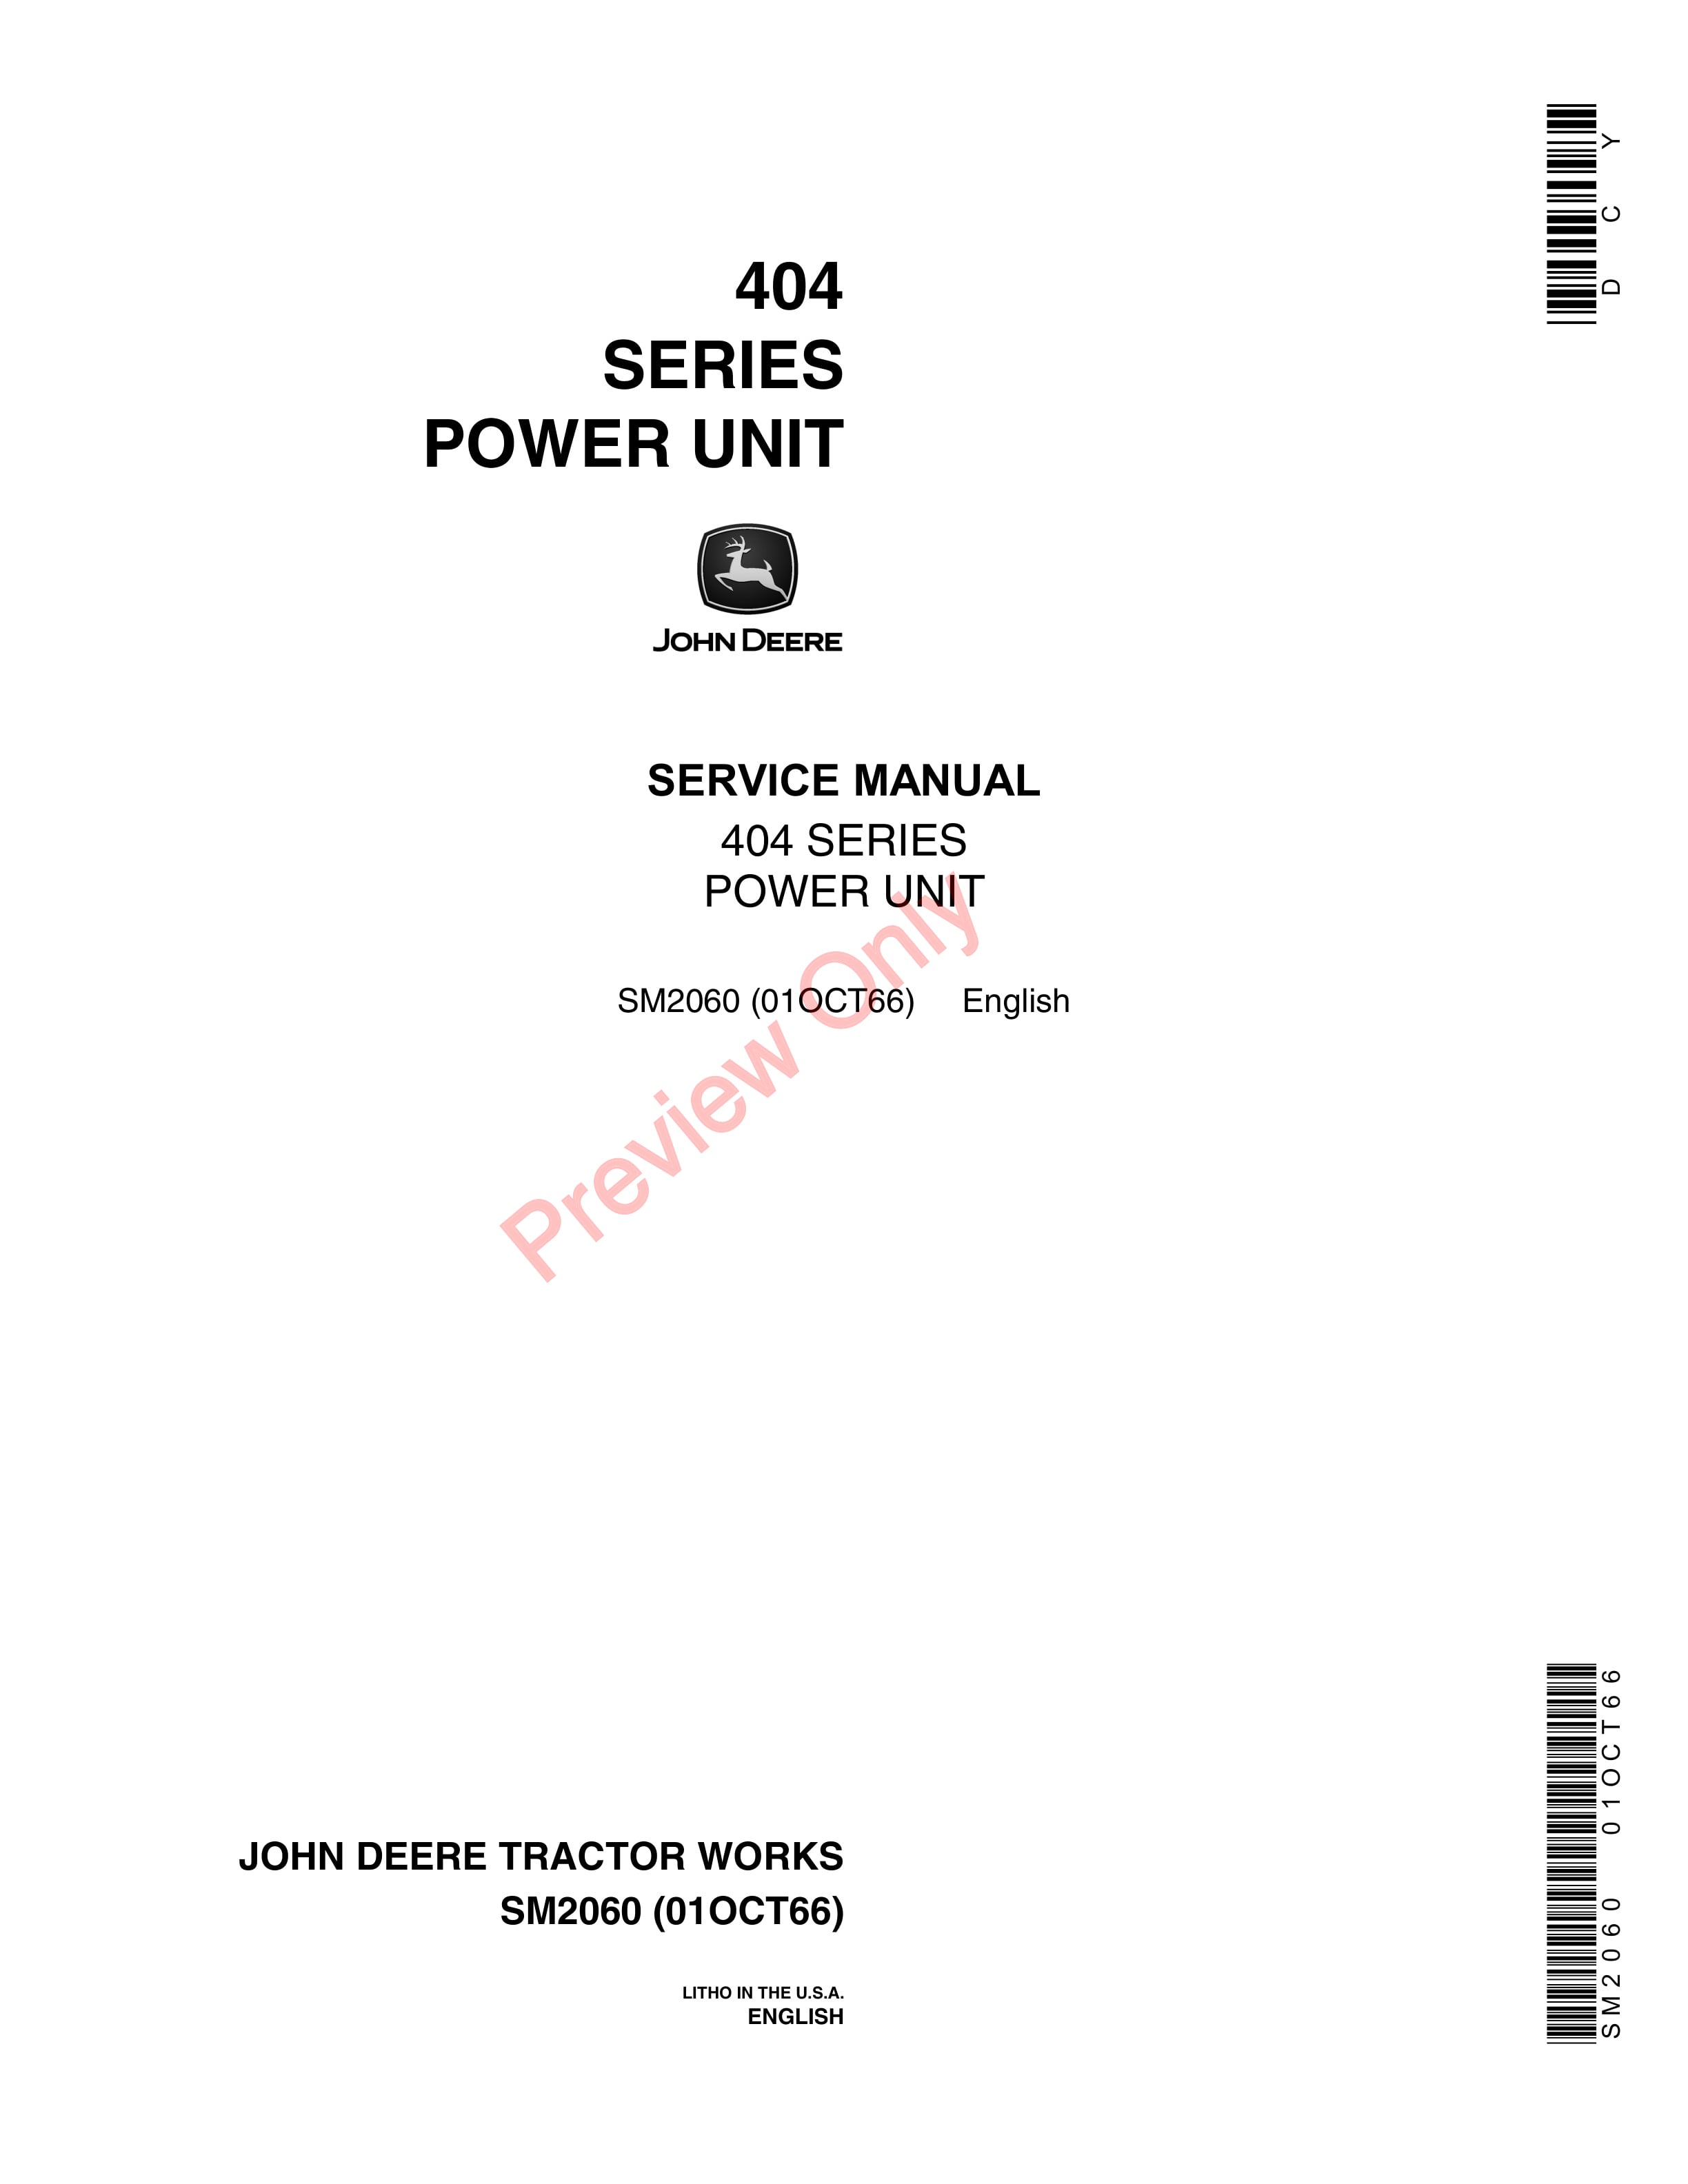 John Deere 404 Series Power Unit Service Manual SM2060 01OCT66-1